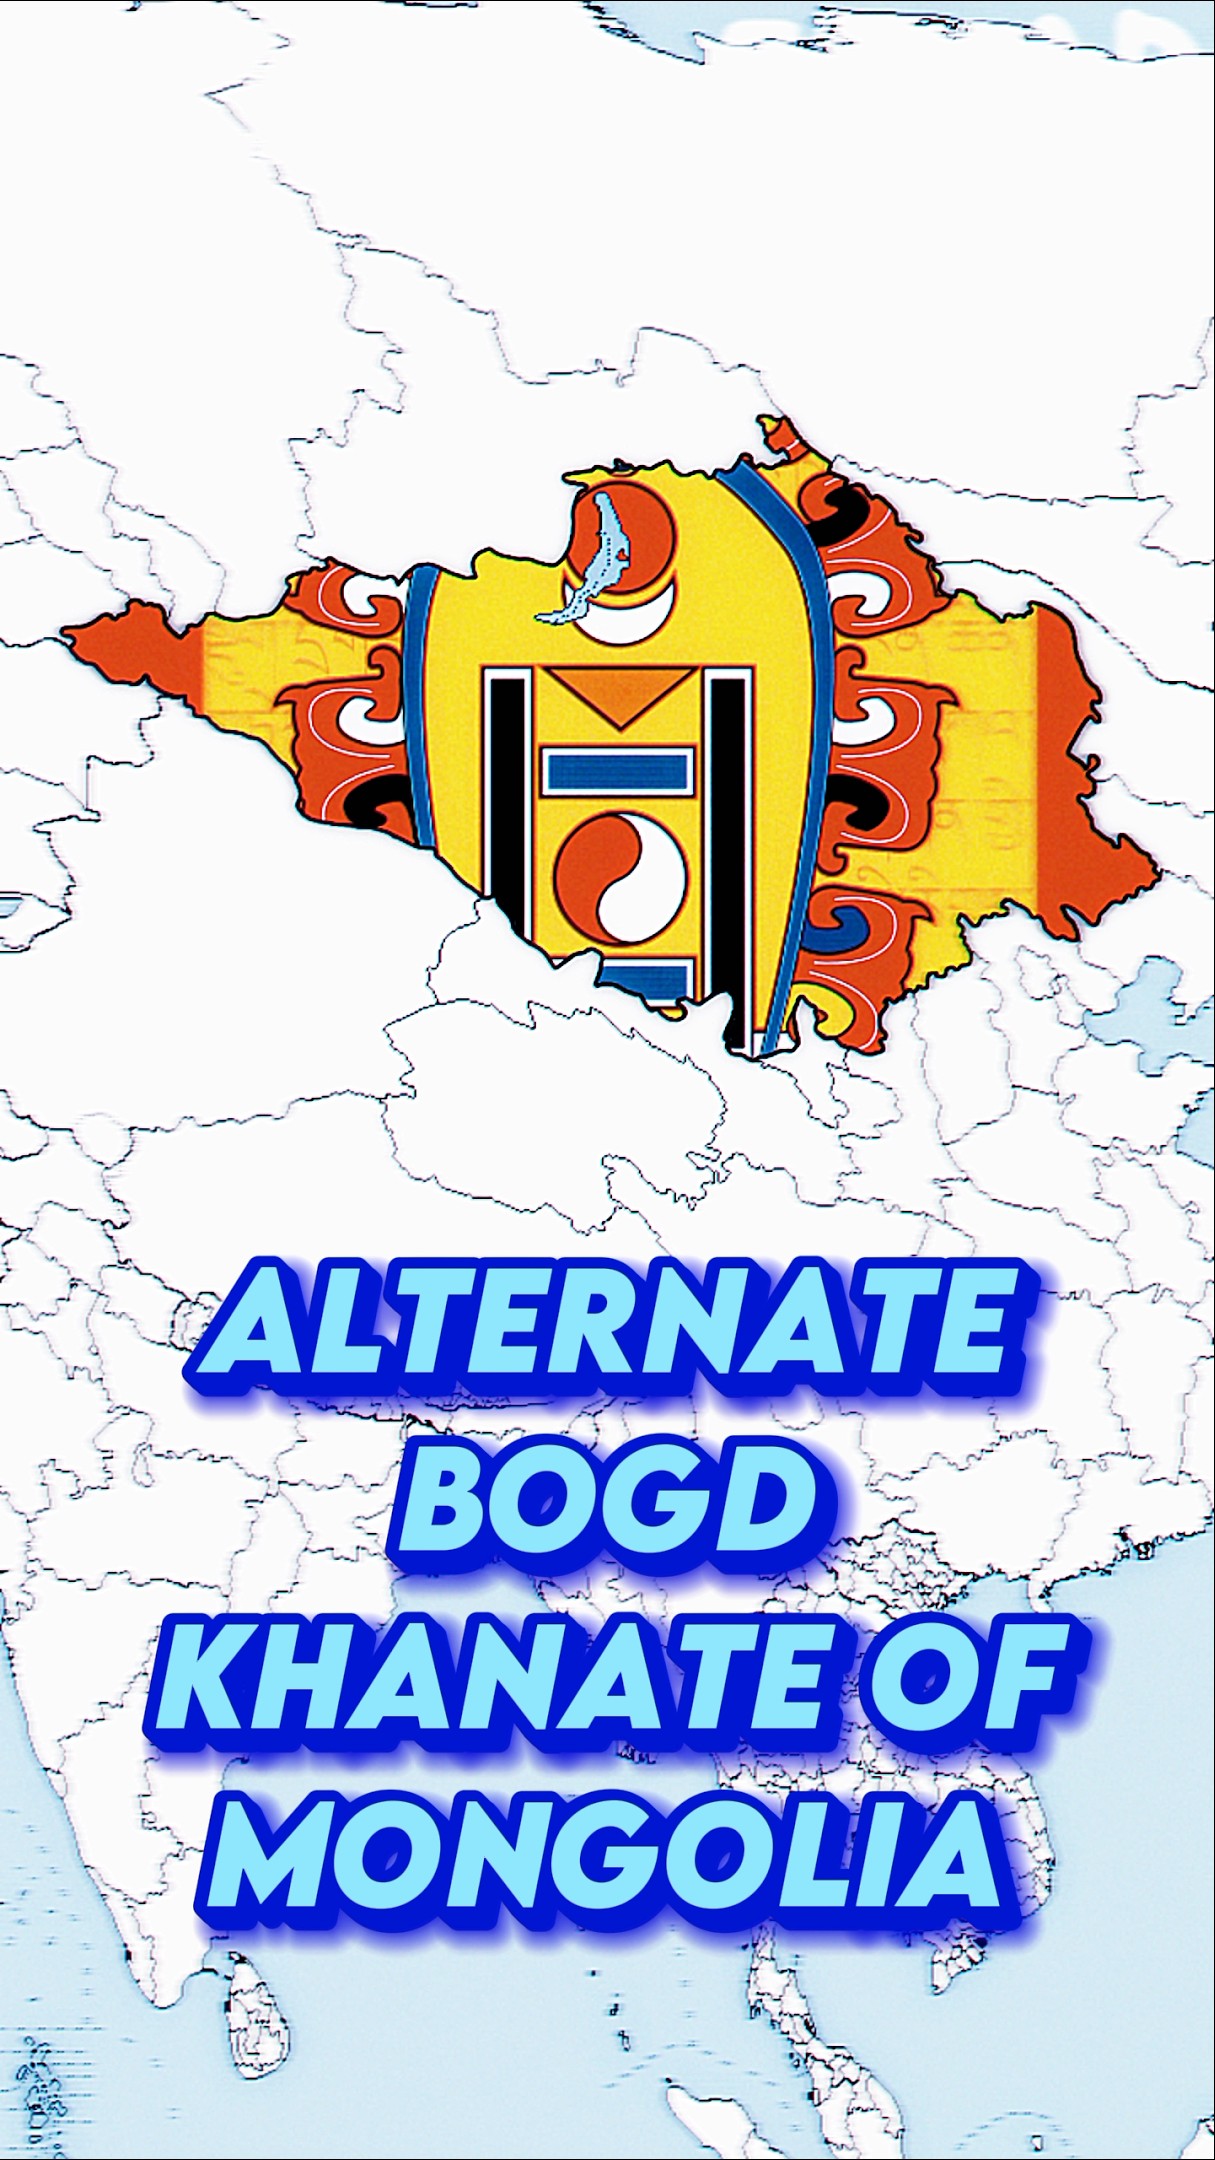 [Alternative Countries / Nothing Ever Lasts Forever] Alternate Bogd Khanate of Mongolia